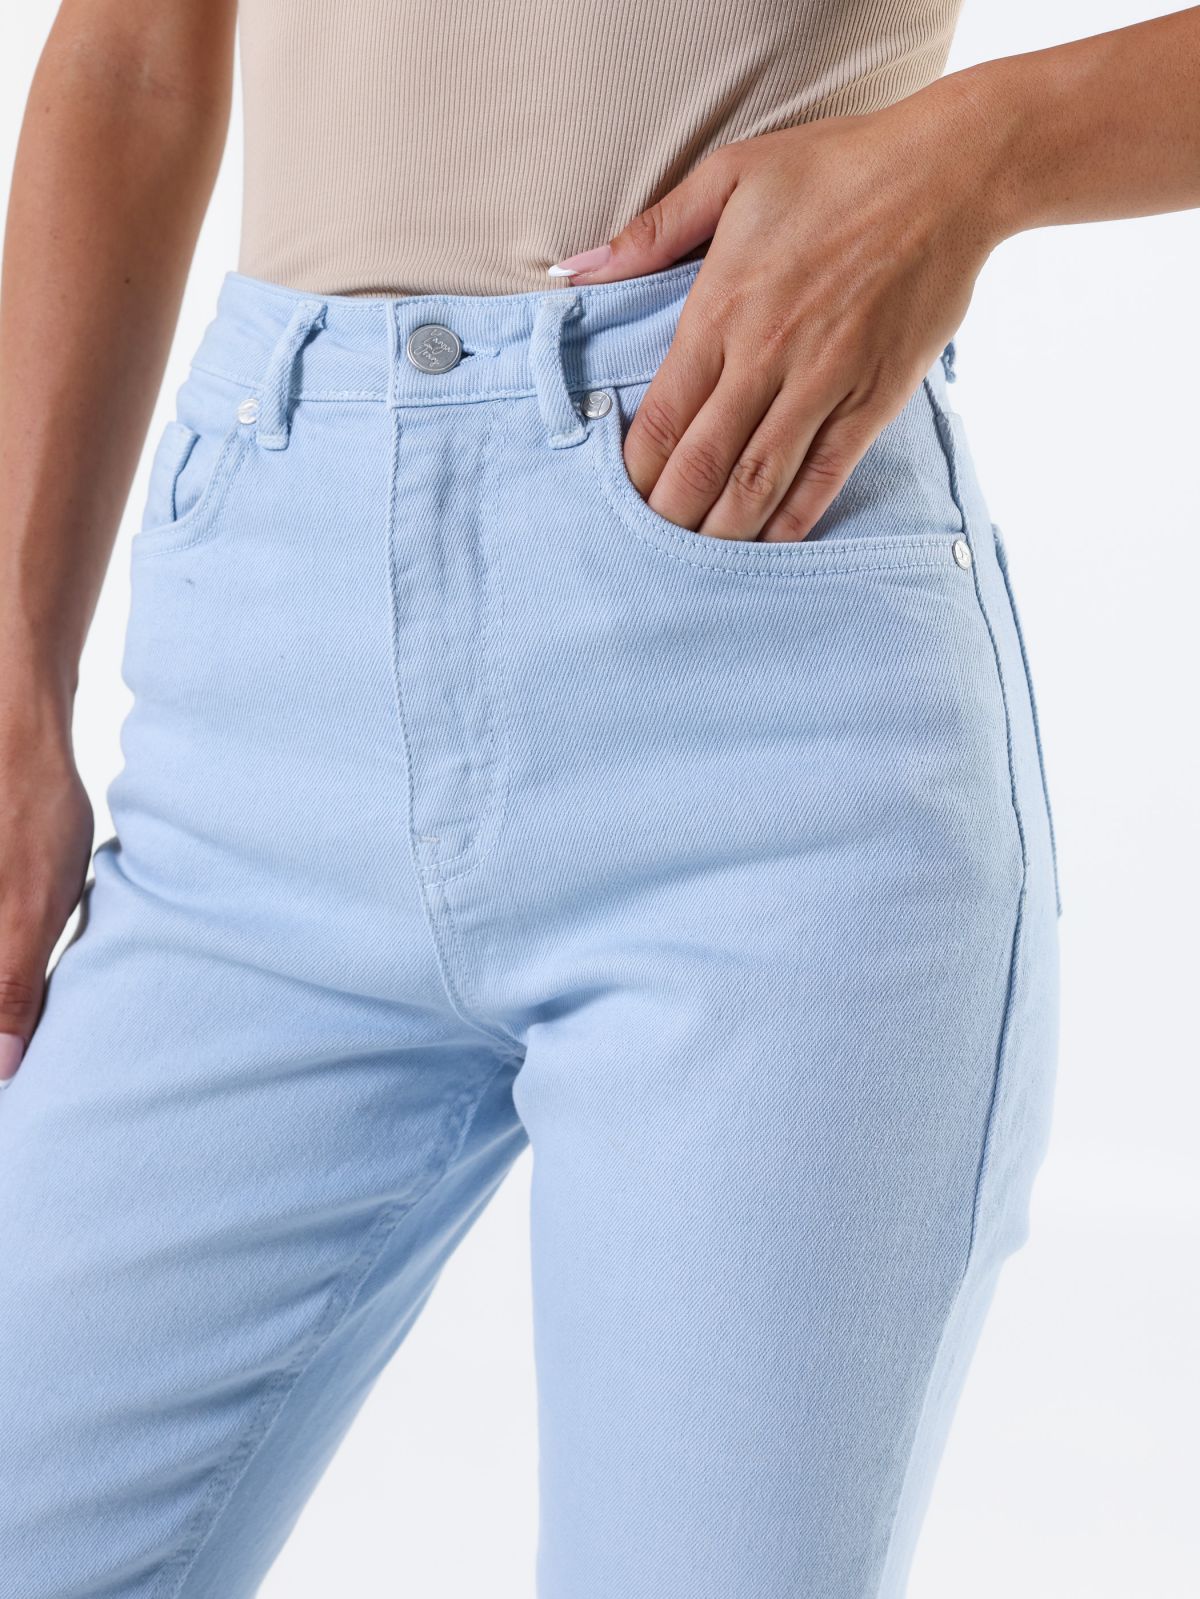  מכנסי ג'ינס ROSE JEANS - RAW של YANGA